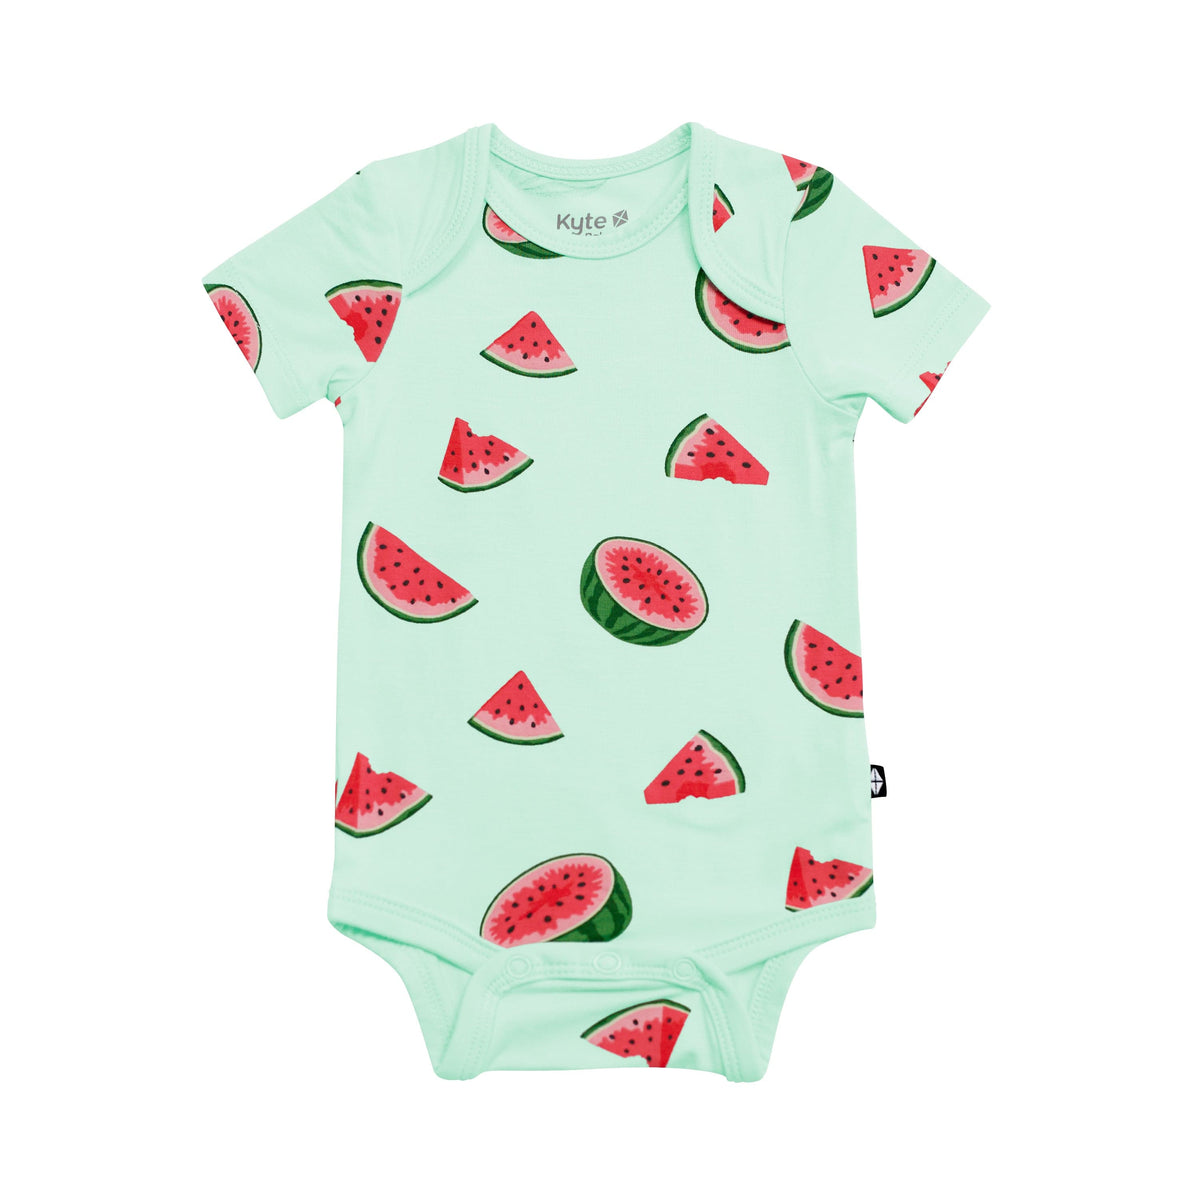 Kyte Baby Short Sleeve Bodysuits Bodysuit in Watermelon